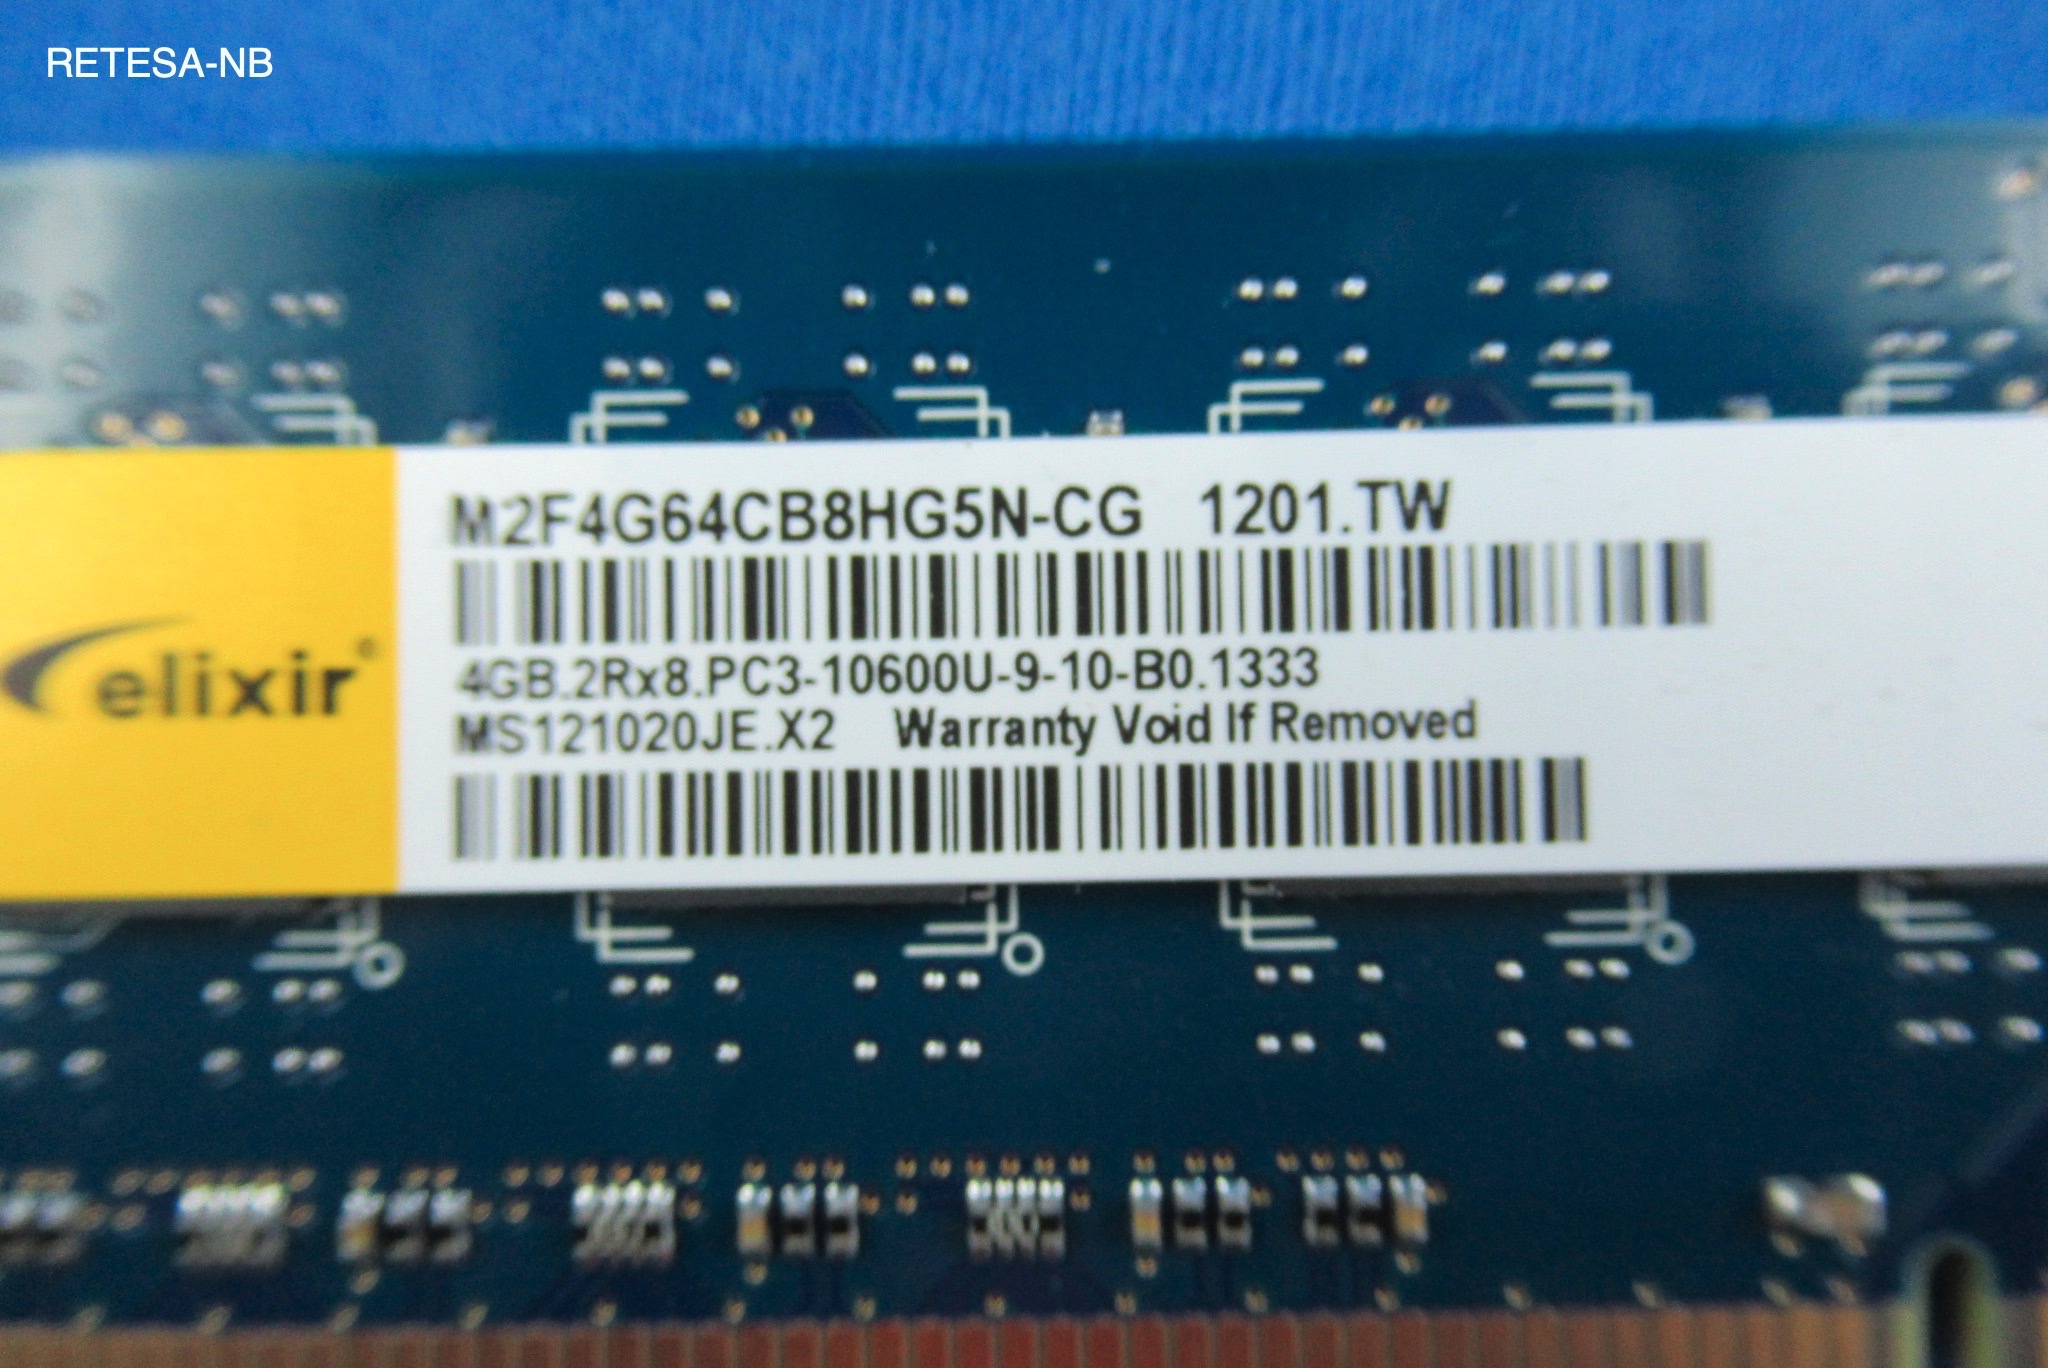 FTS DDR3-RAM 4GB PC1333 COMPURAM CRM4192D3/FTSD3378